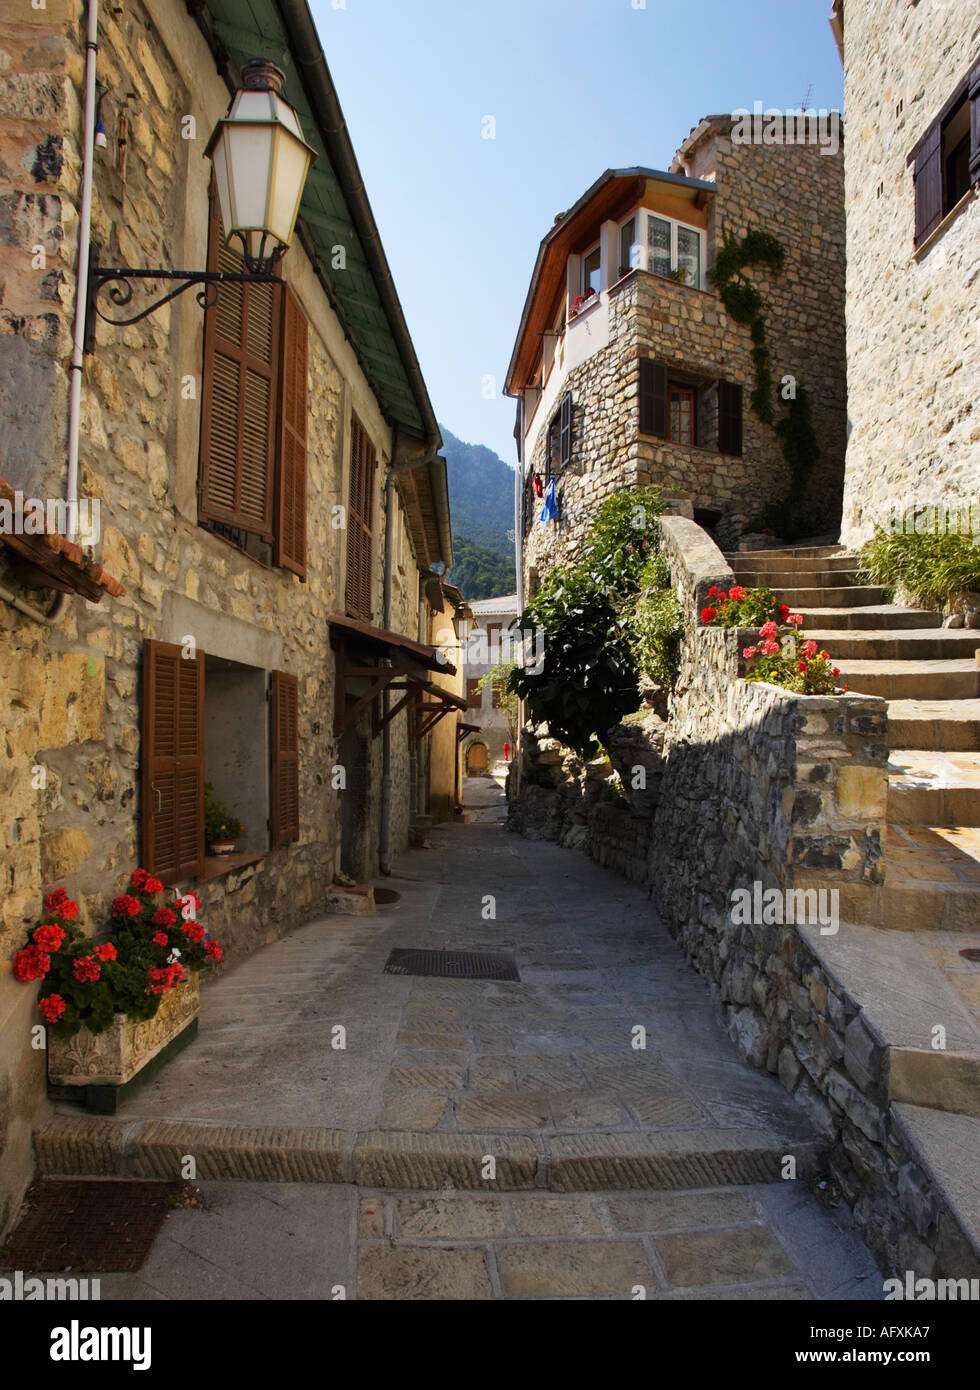 Village, Francia - estrecha callejuela empedrada en Bairols Mountain Village, por encima del valle de tinee, Alpes Maritimes, Francia, Europa Foto de stock